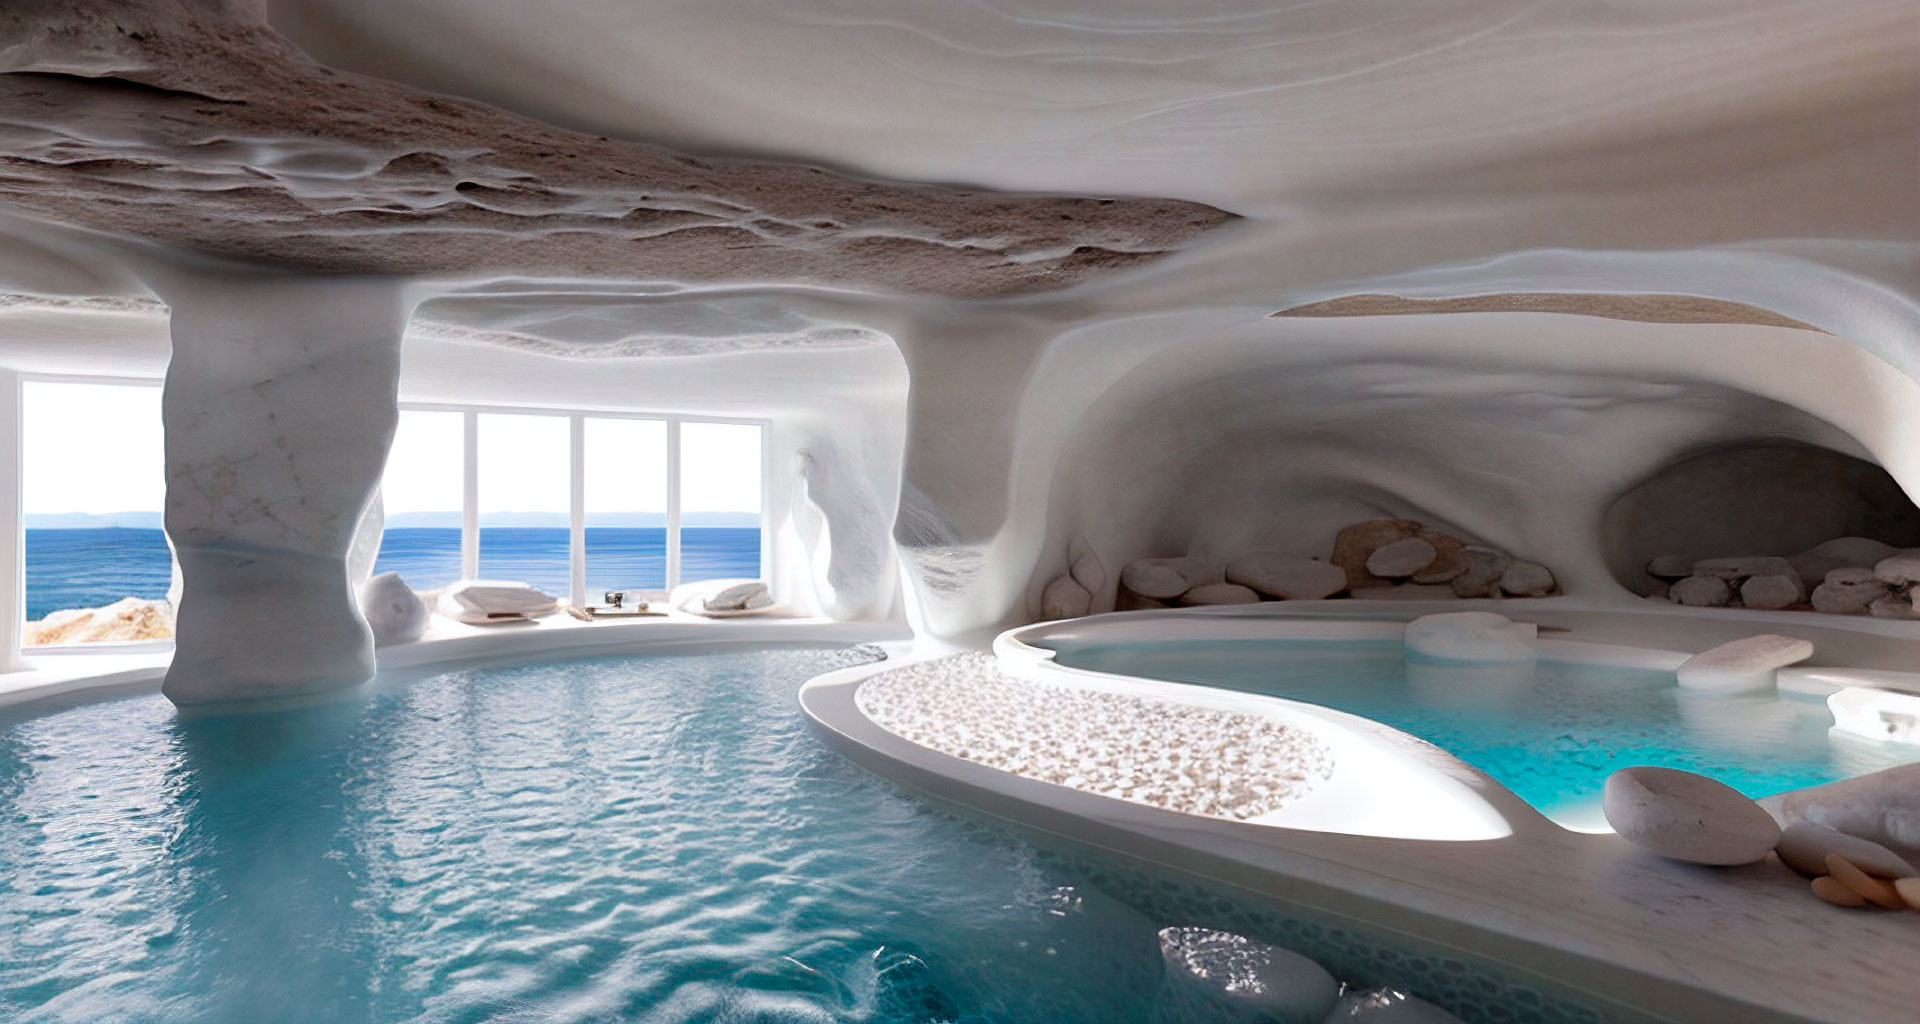 Interior design of a spa that simulates a cave